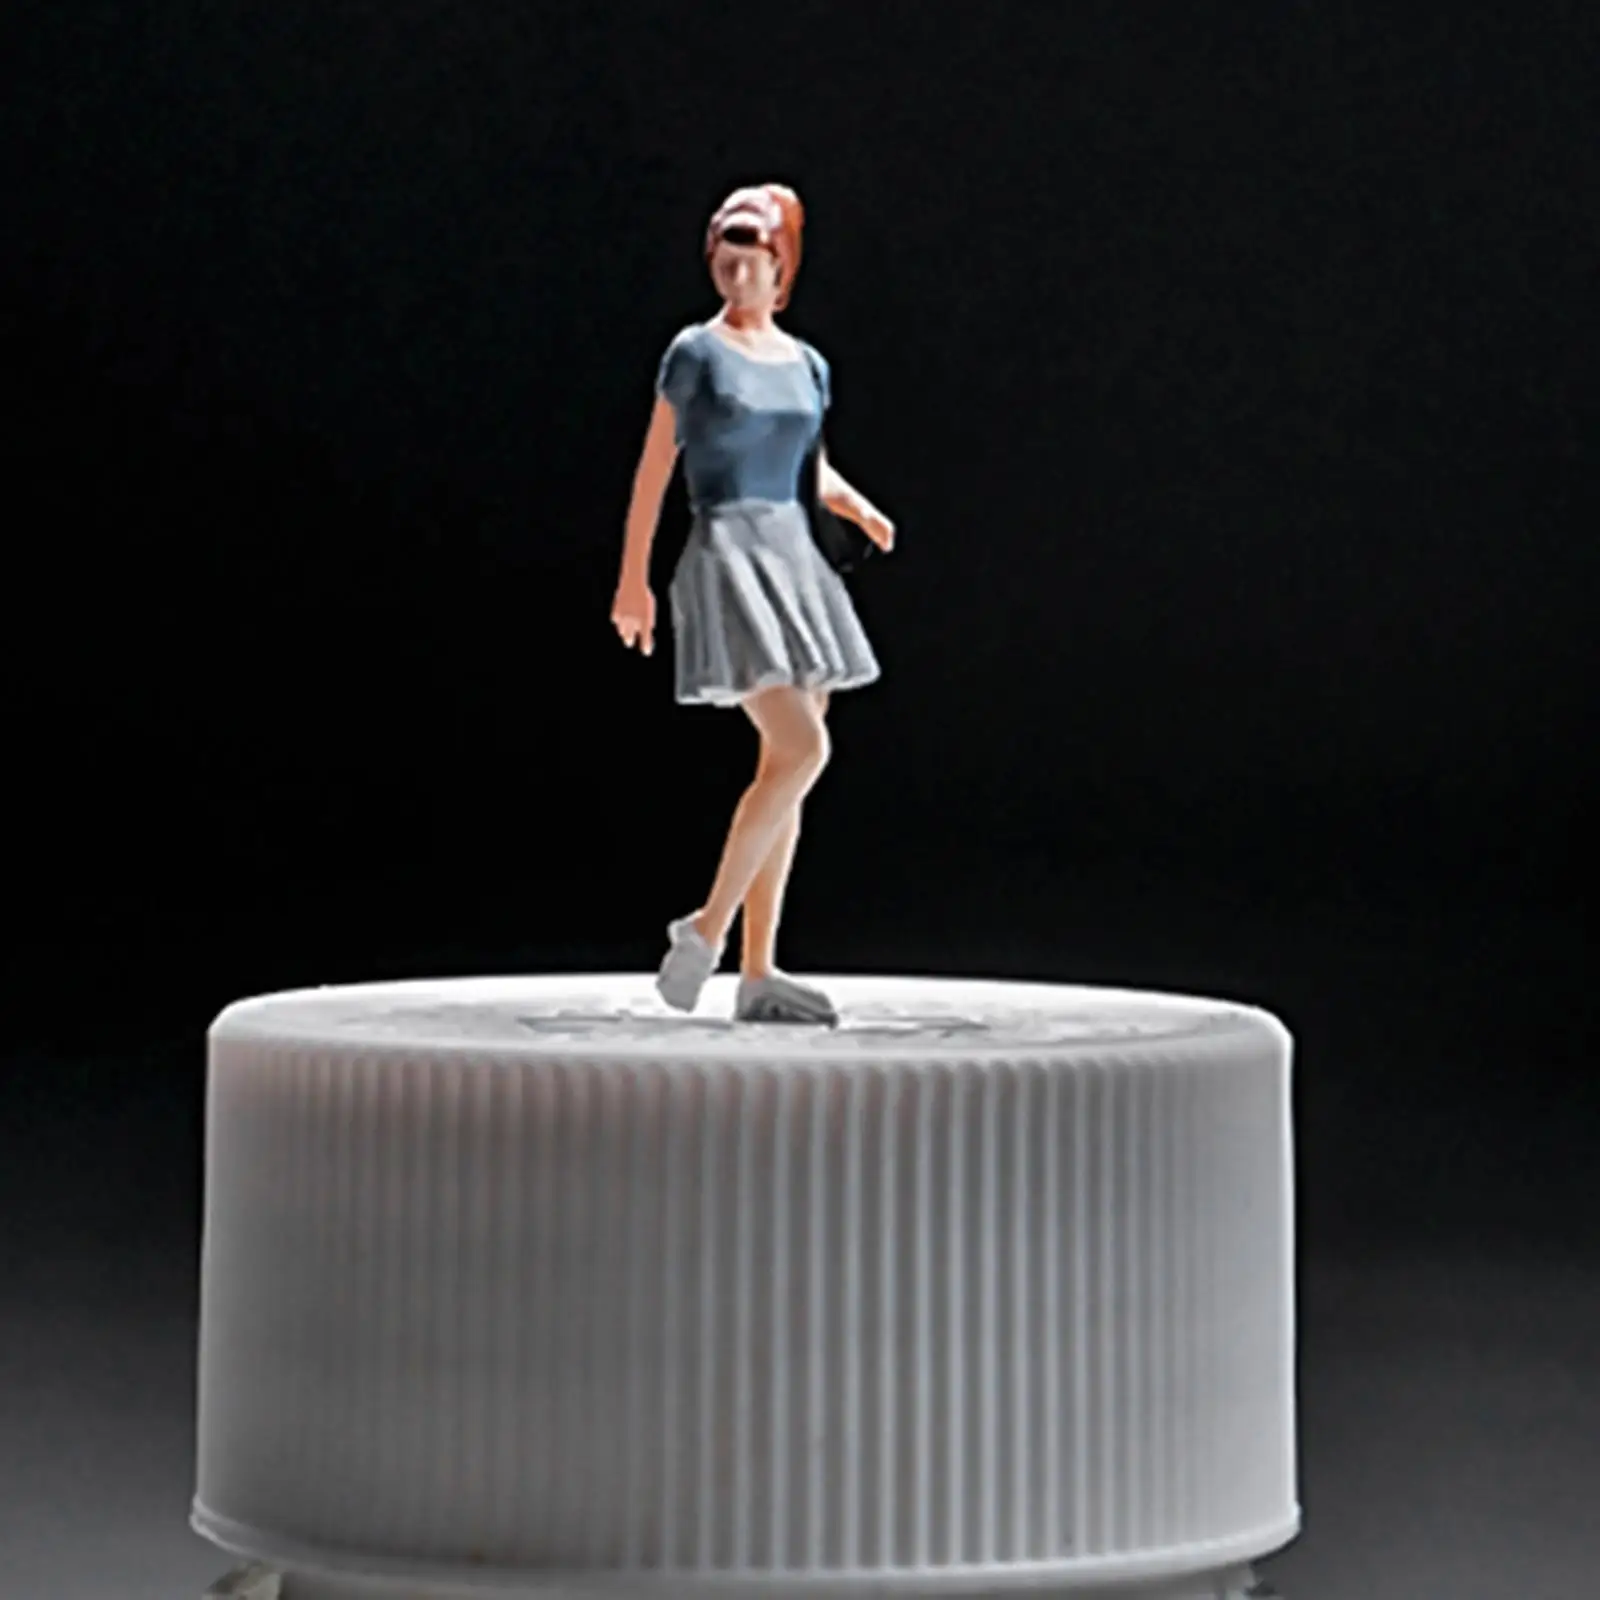 1/64 Scale Miniature Figure Blue Skirt Girl Scene Layout for Railway Collections Fariy Garden Model Train Architecture Model